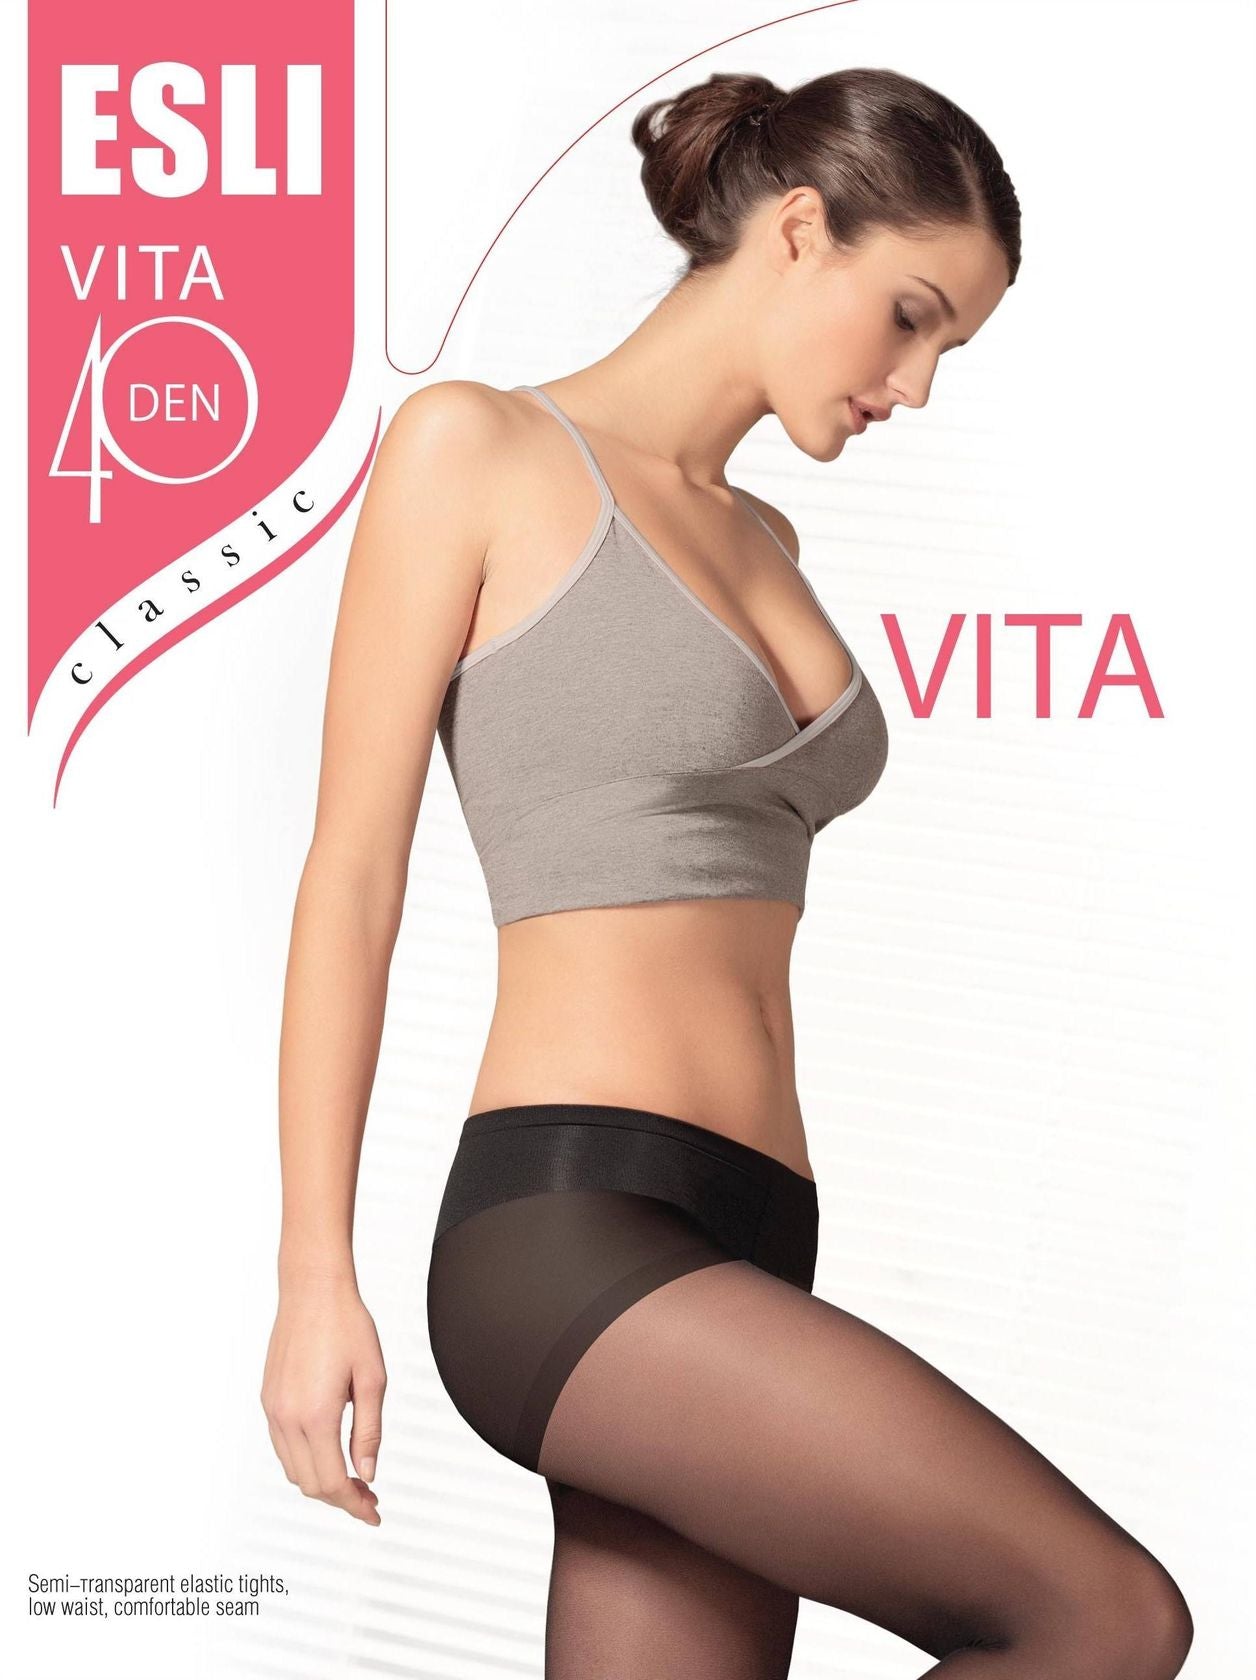 Conte/Esli Vita 40 Den - Classic Low Waist Women's Tights with Reinforced Shorts (16С-39СПЕ)